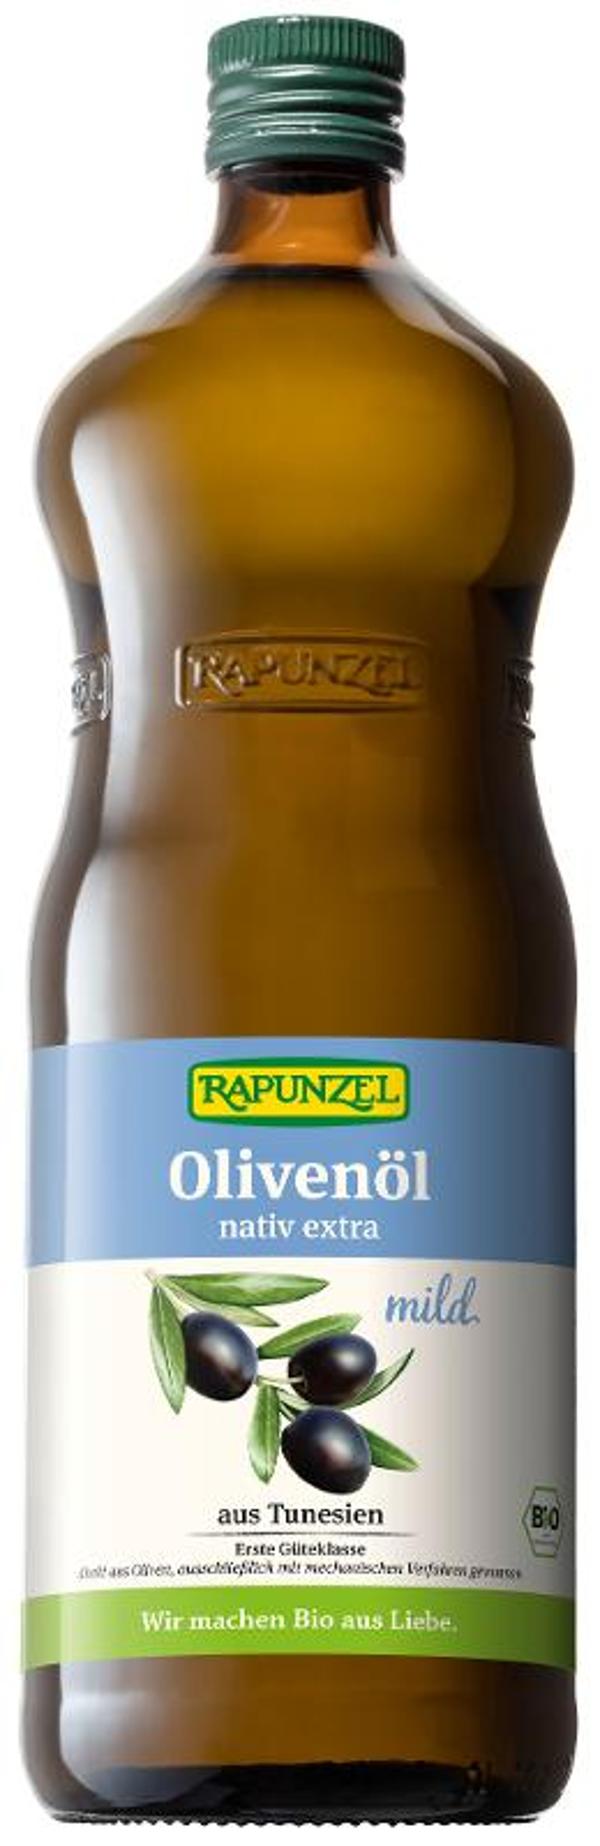 Produktfoto zu Olivenöl mild 1 l